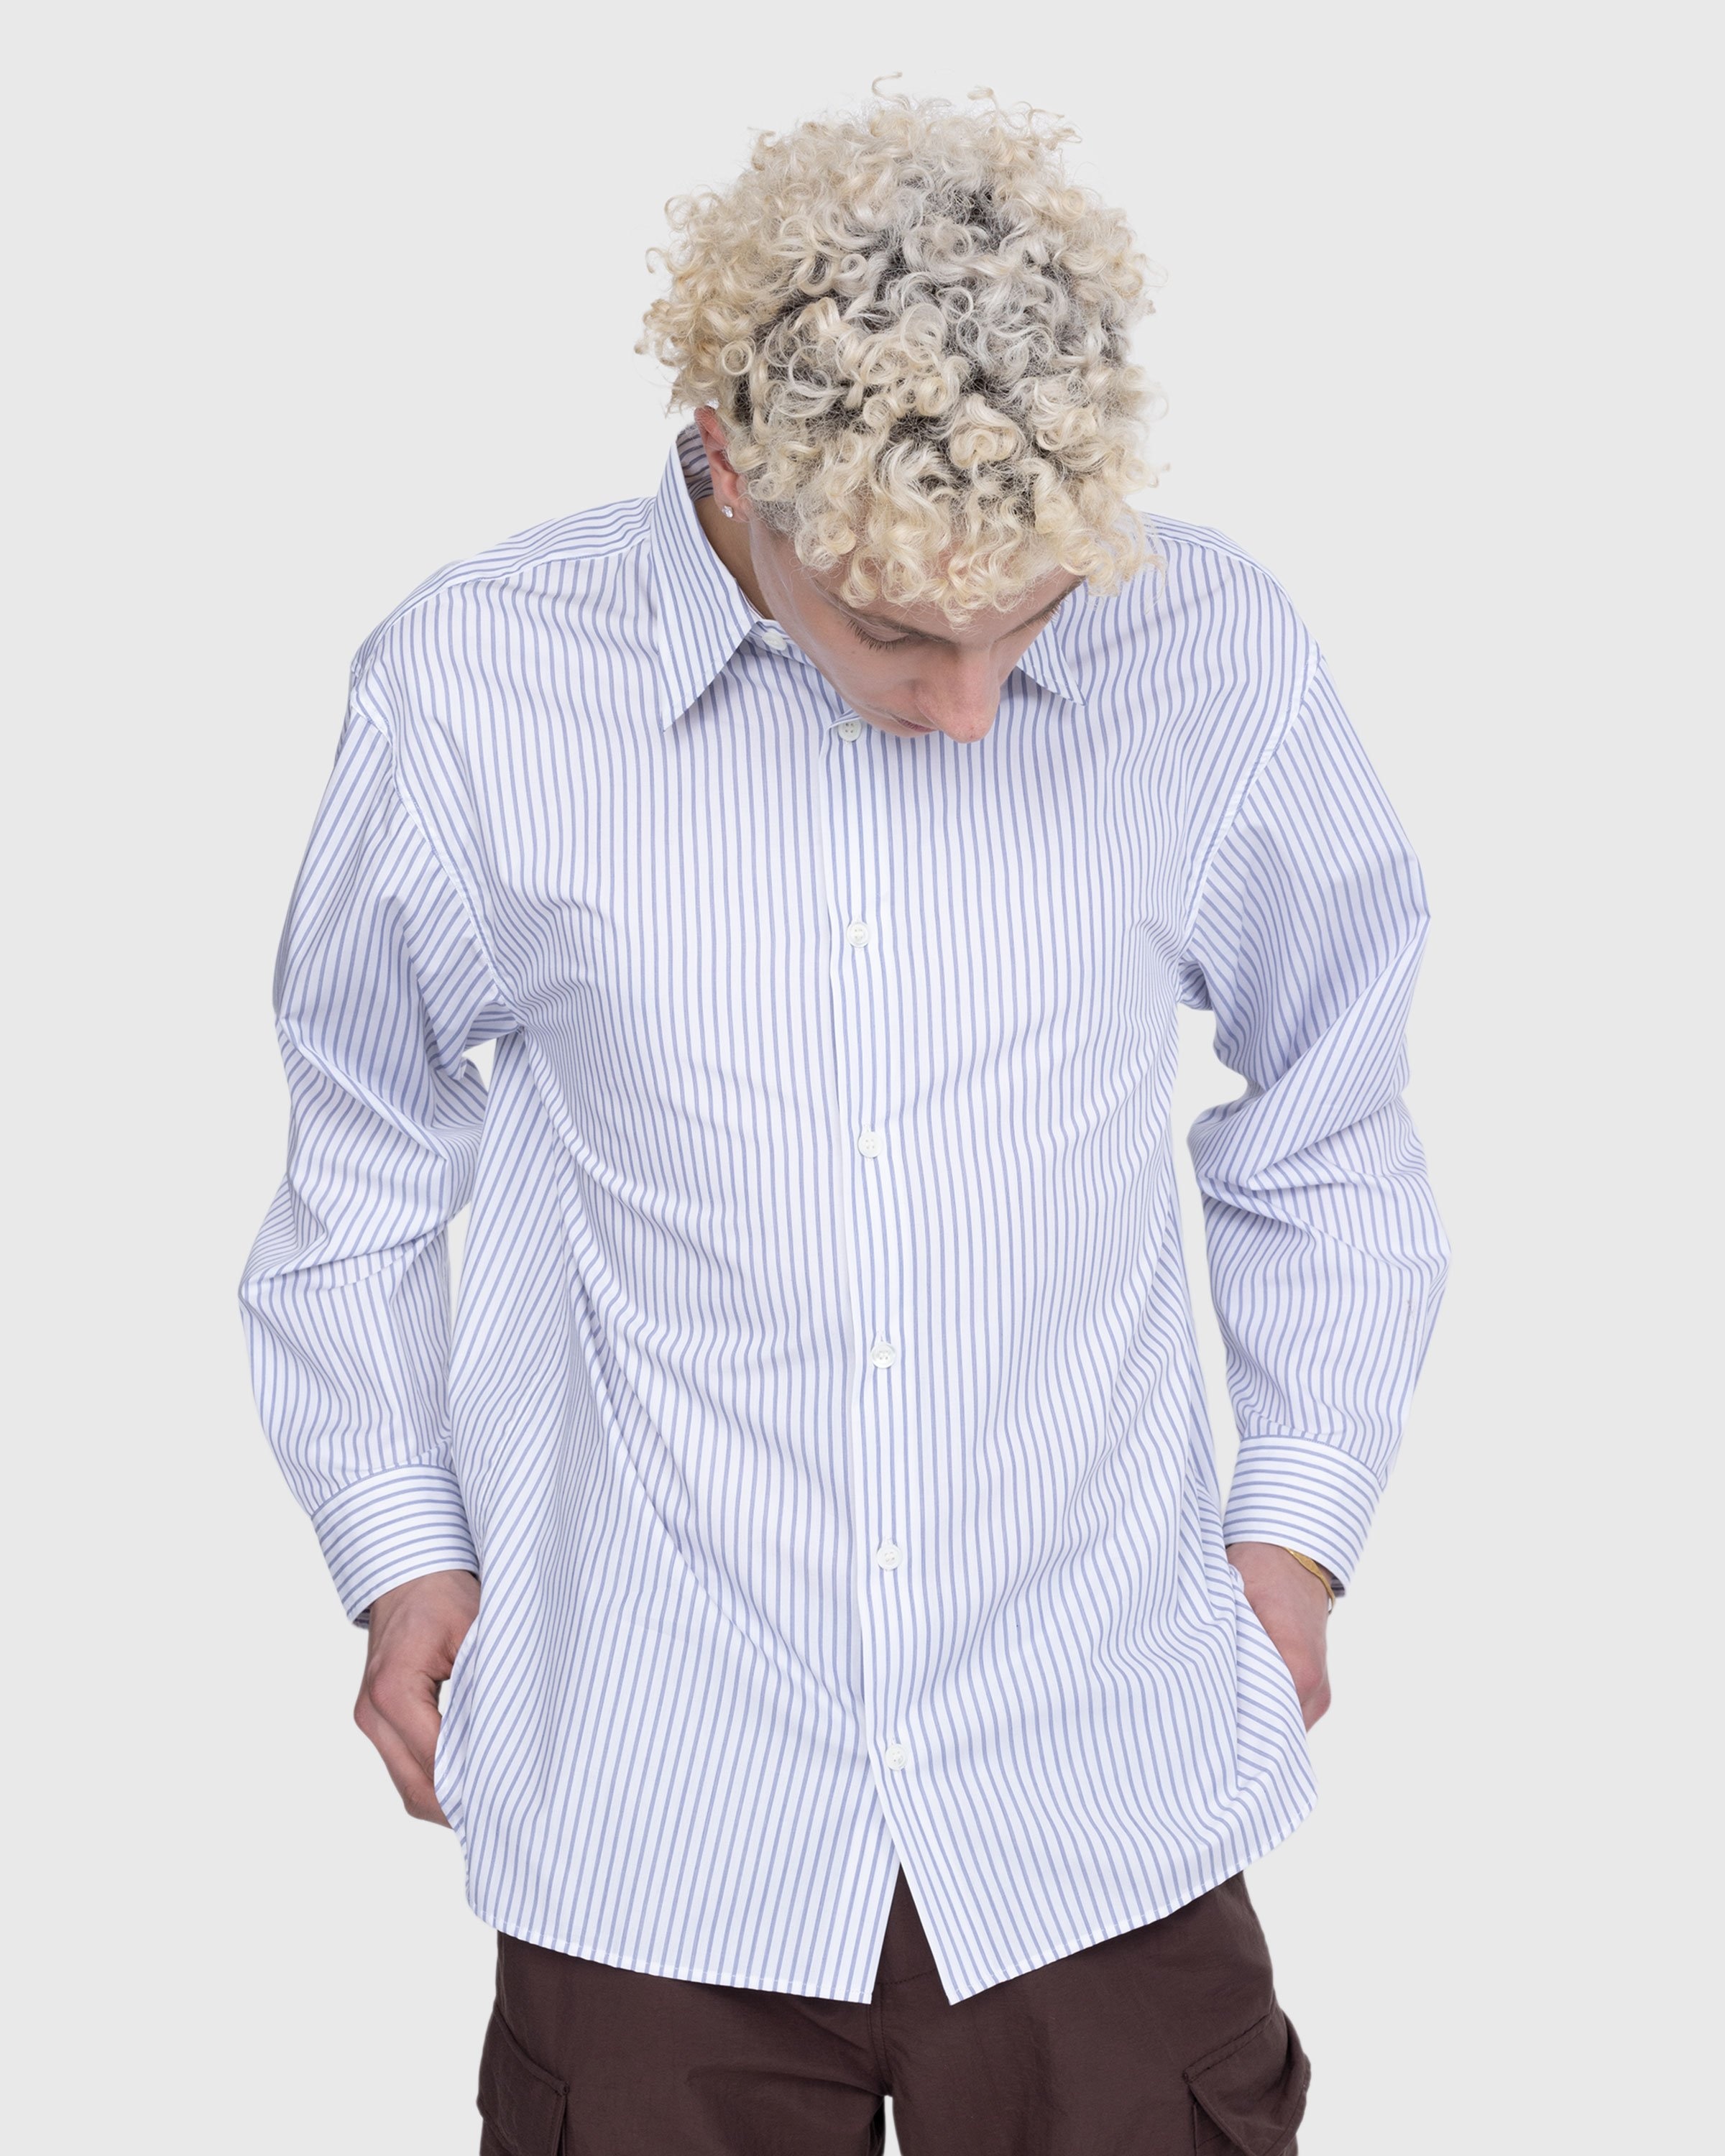 Dries van Noten – Croom Shirt Striped White - Longsleeve Shirts - White - Image 5